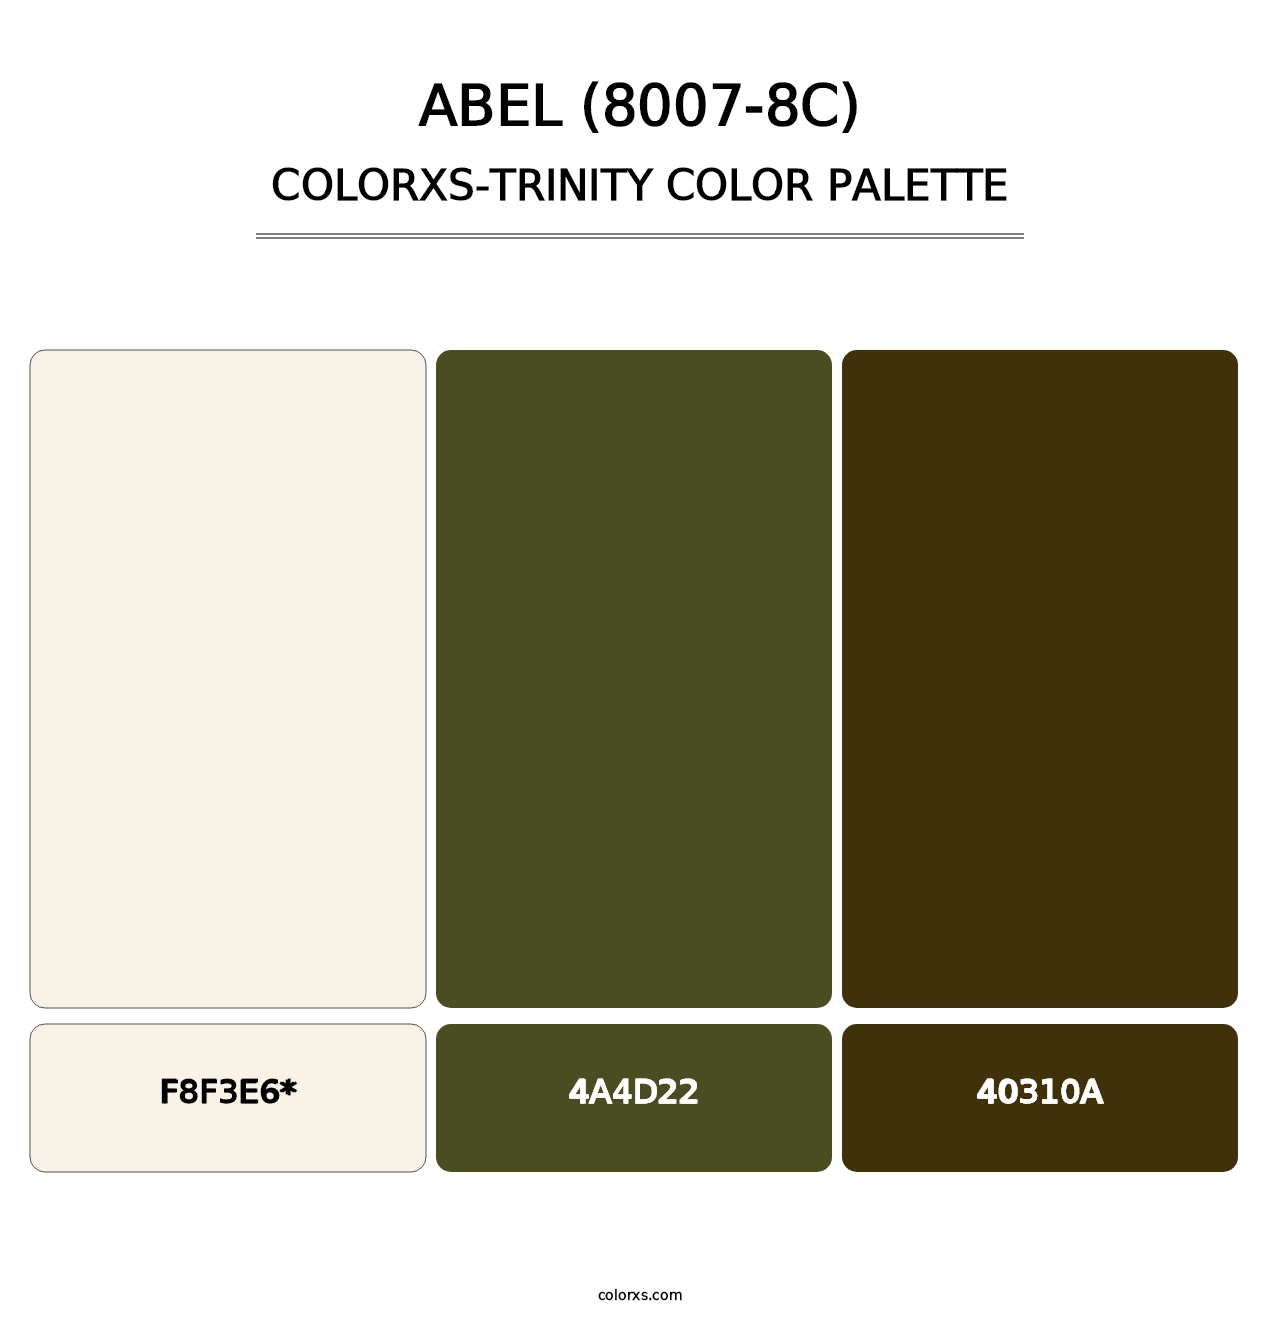 Abel (8007-8C) - Colorxs Trinity Palette